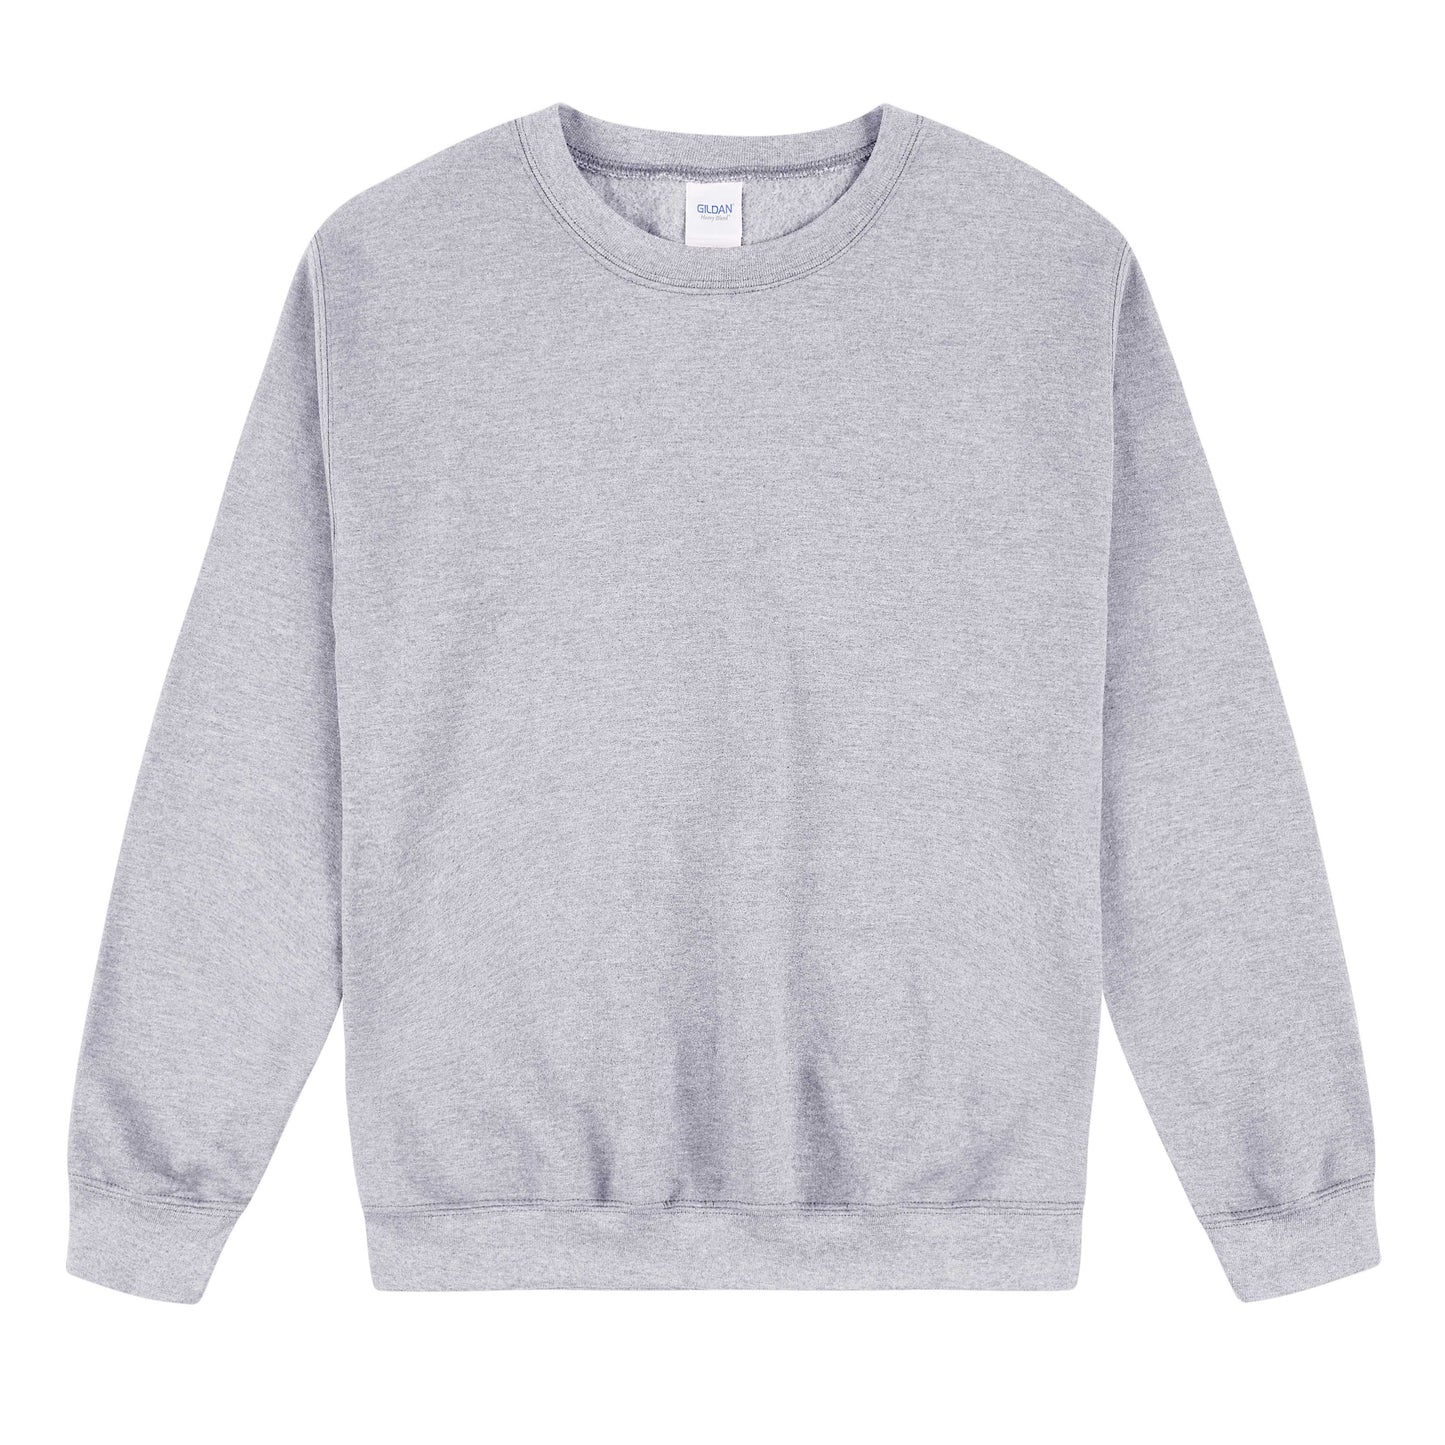 Grey Crewneck jumper sweater